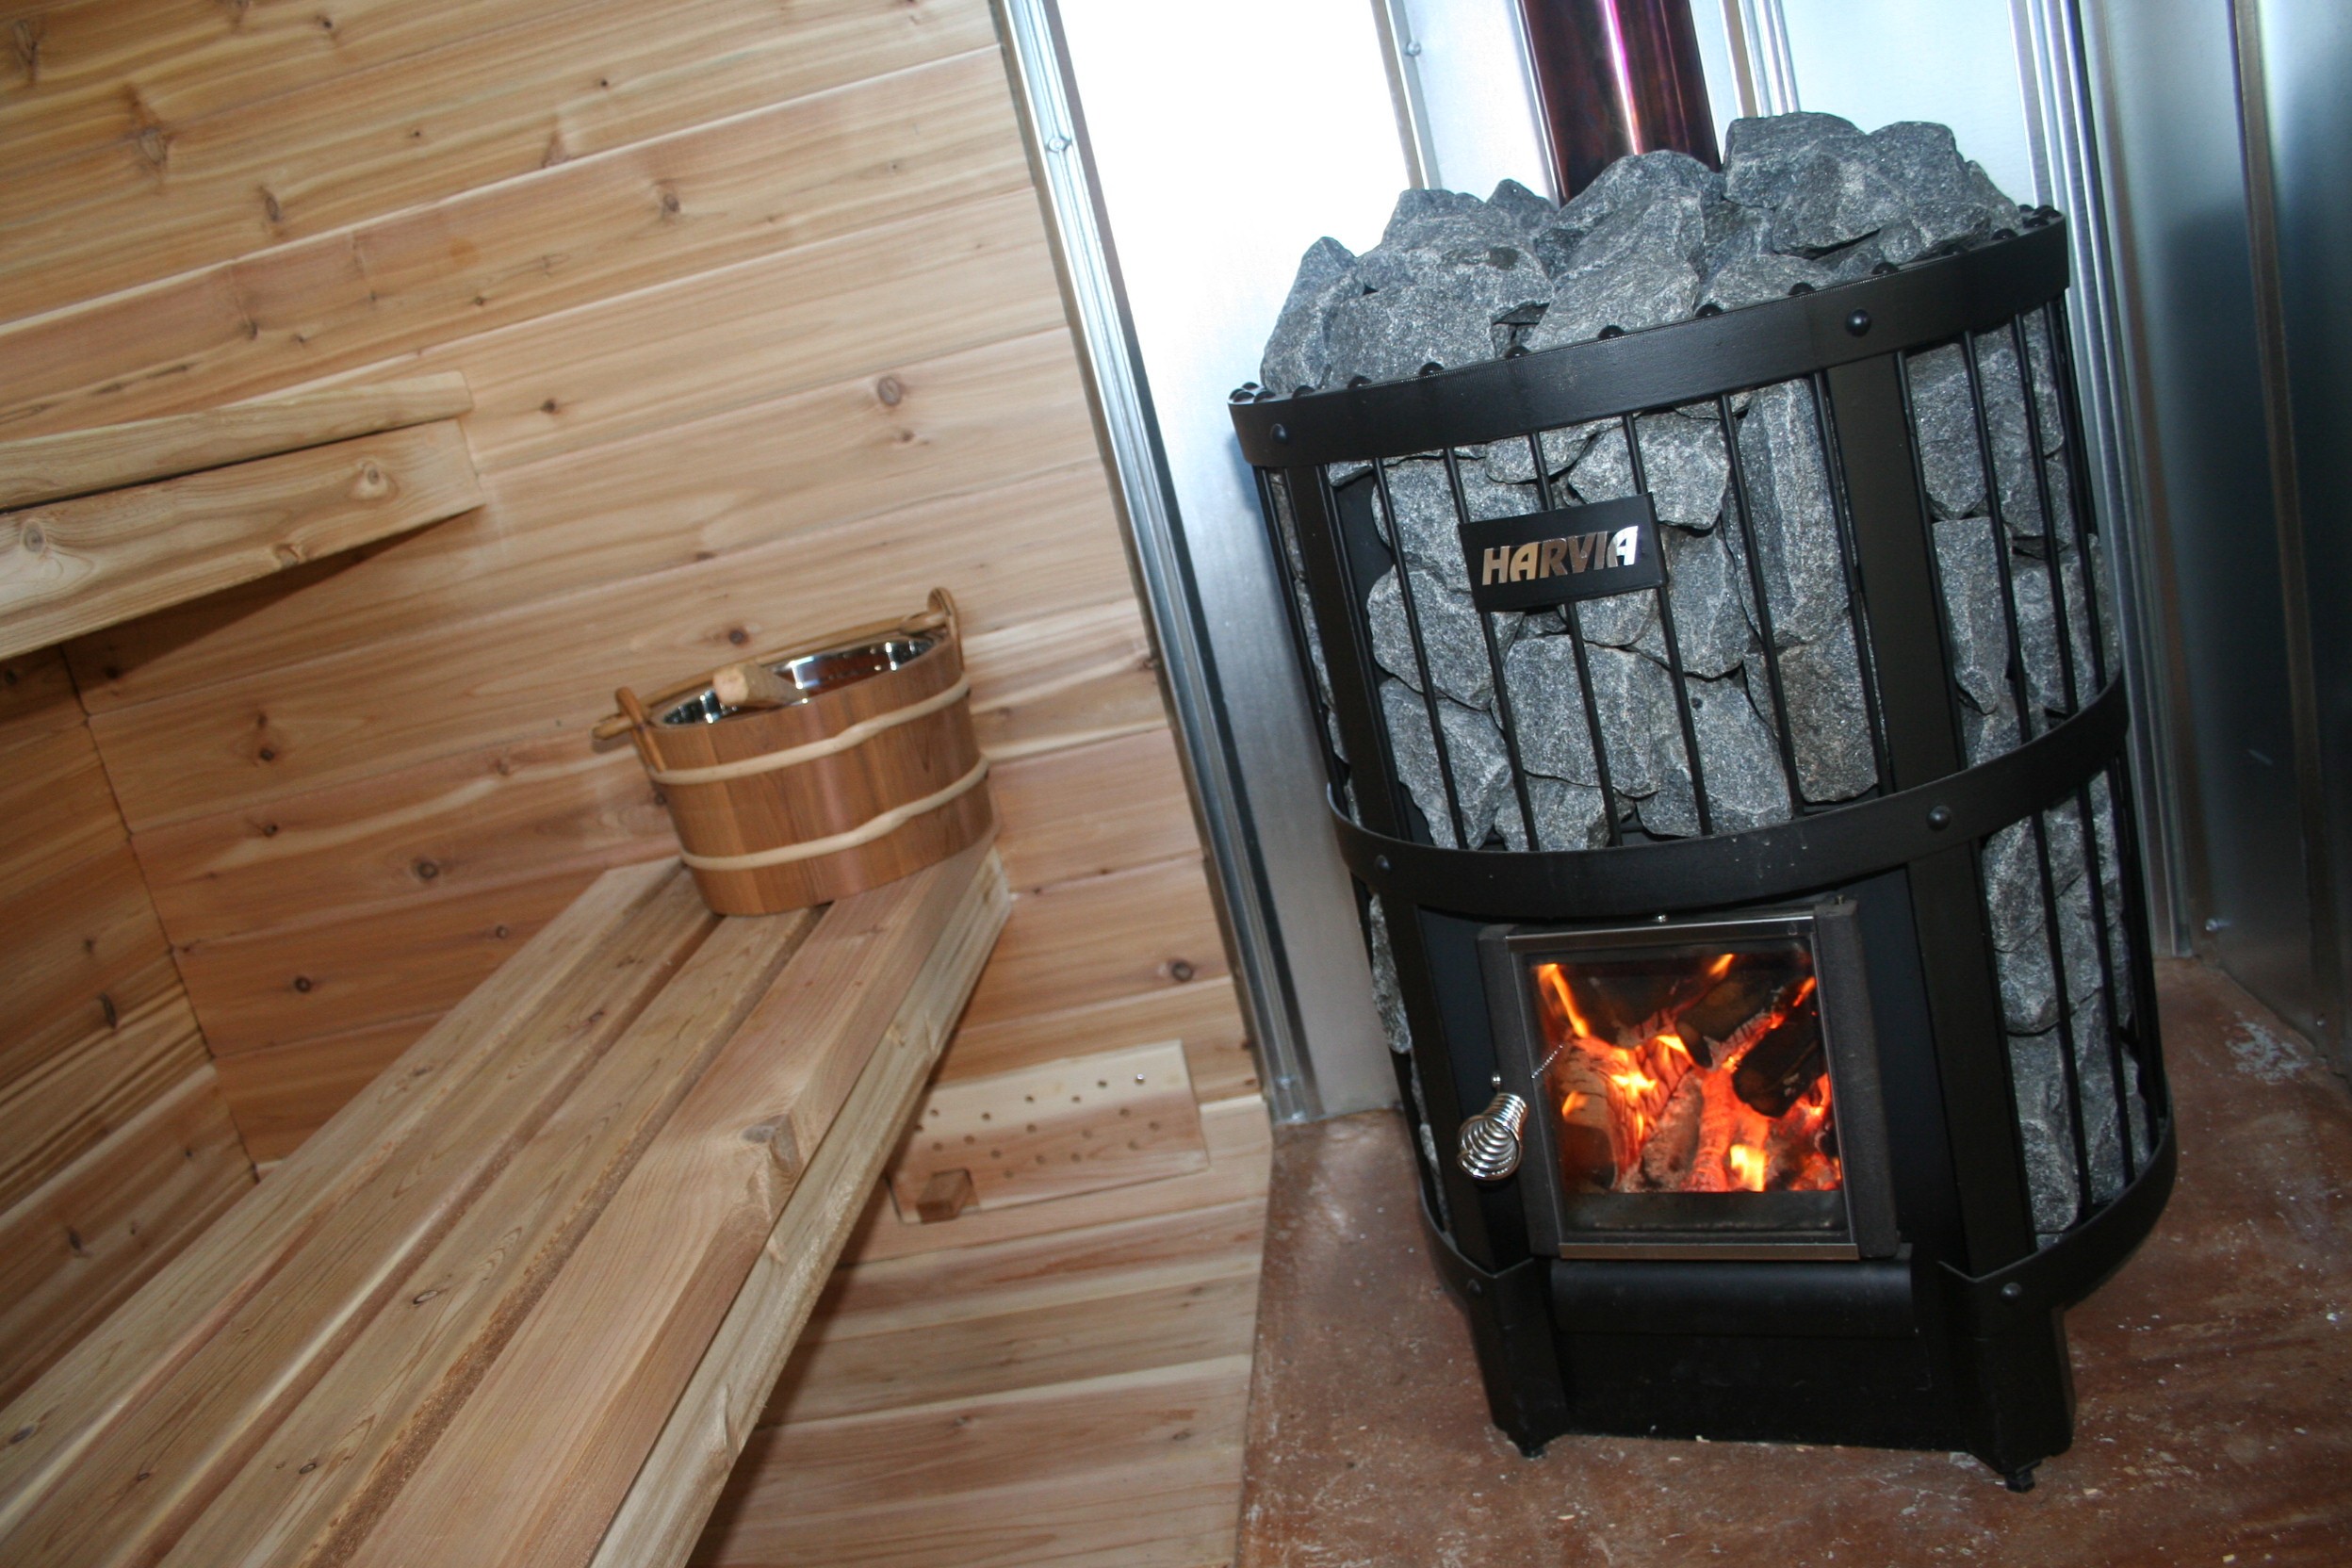 Woodworking homemade sauna heater PDF Free Download